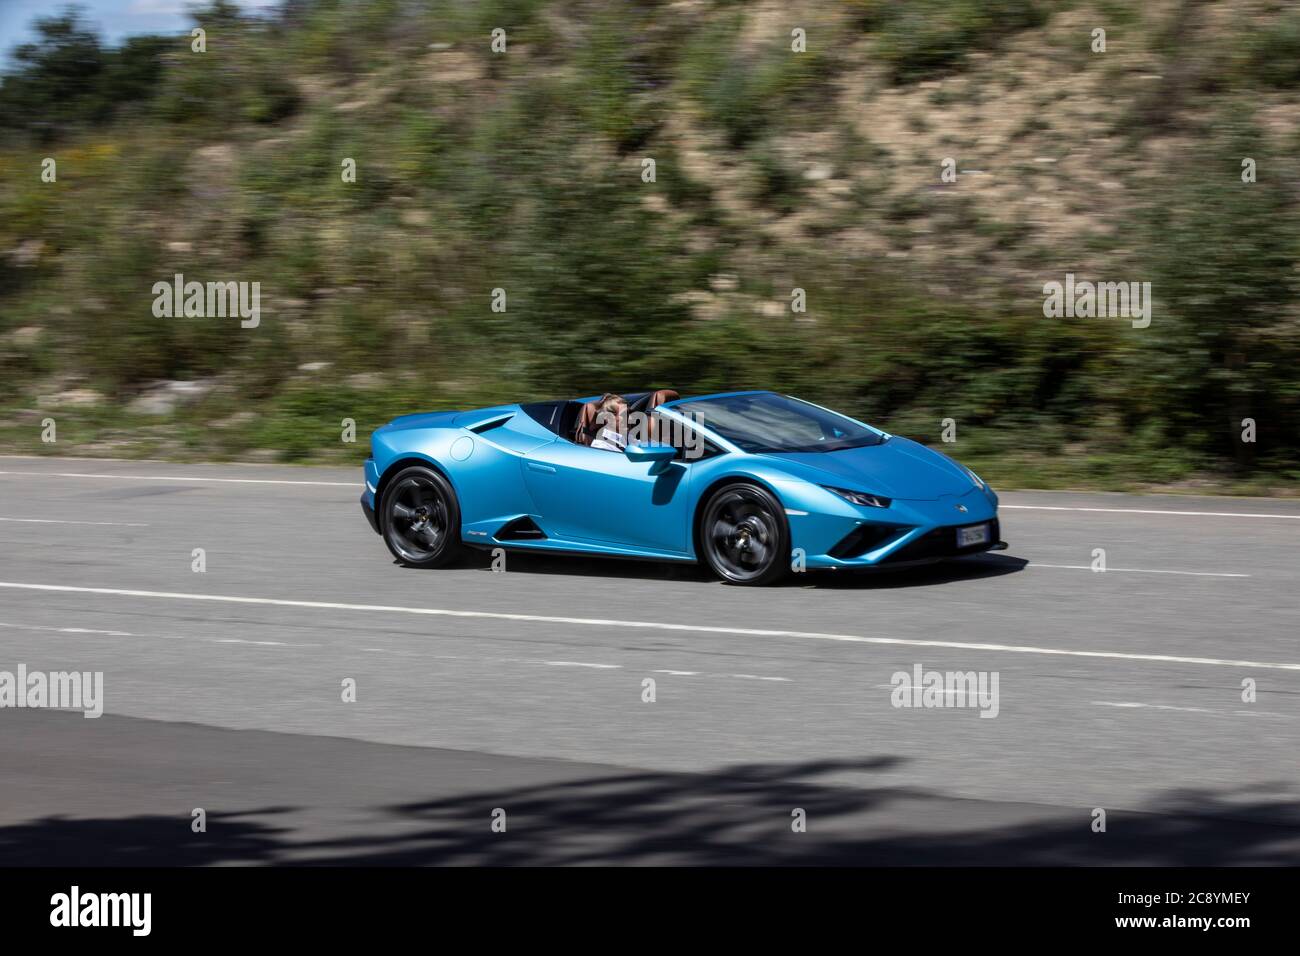 Test-Driving The Lamborghini Huracan EVO RWD Spyder: Here Be Dragons